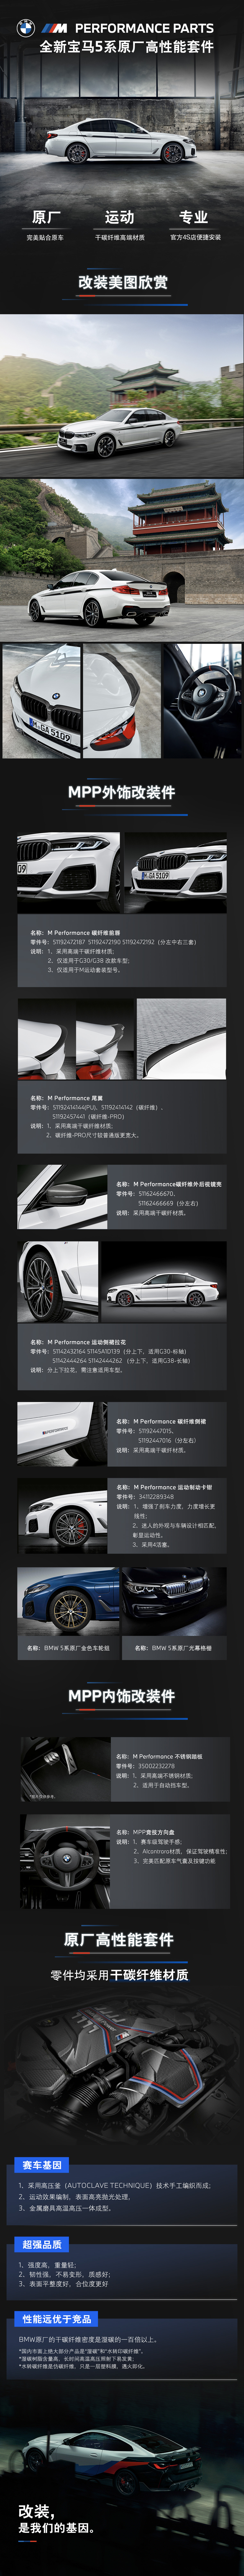 BMW MPP原厂高性能套件 5系M Performance 碳纤维后视镜壳 代金券